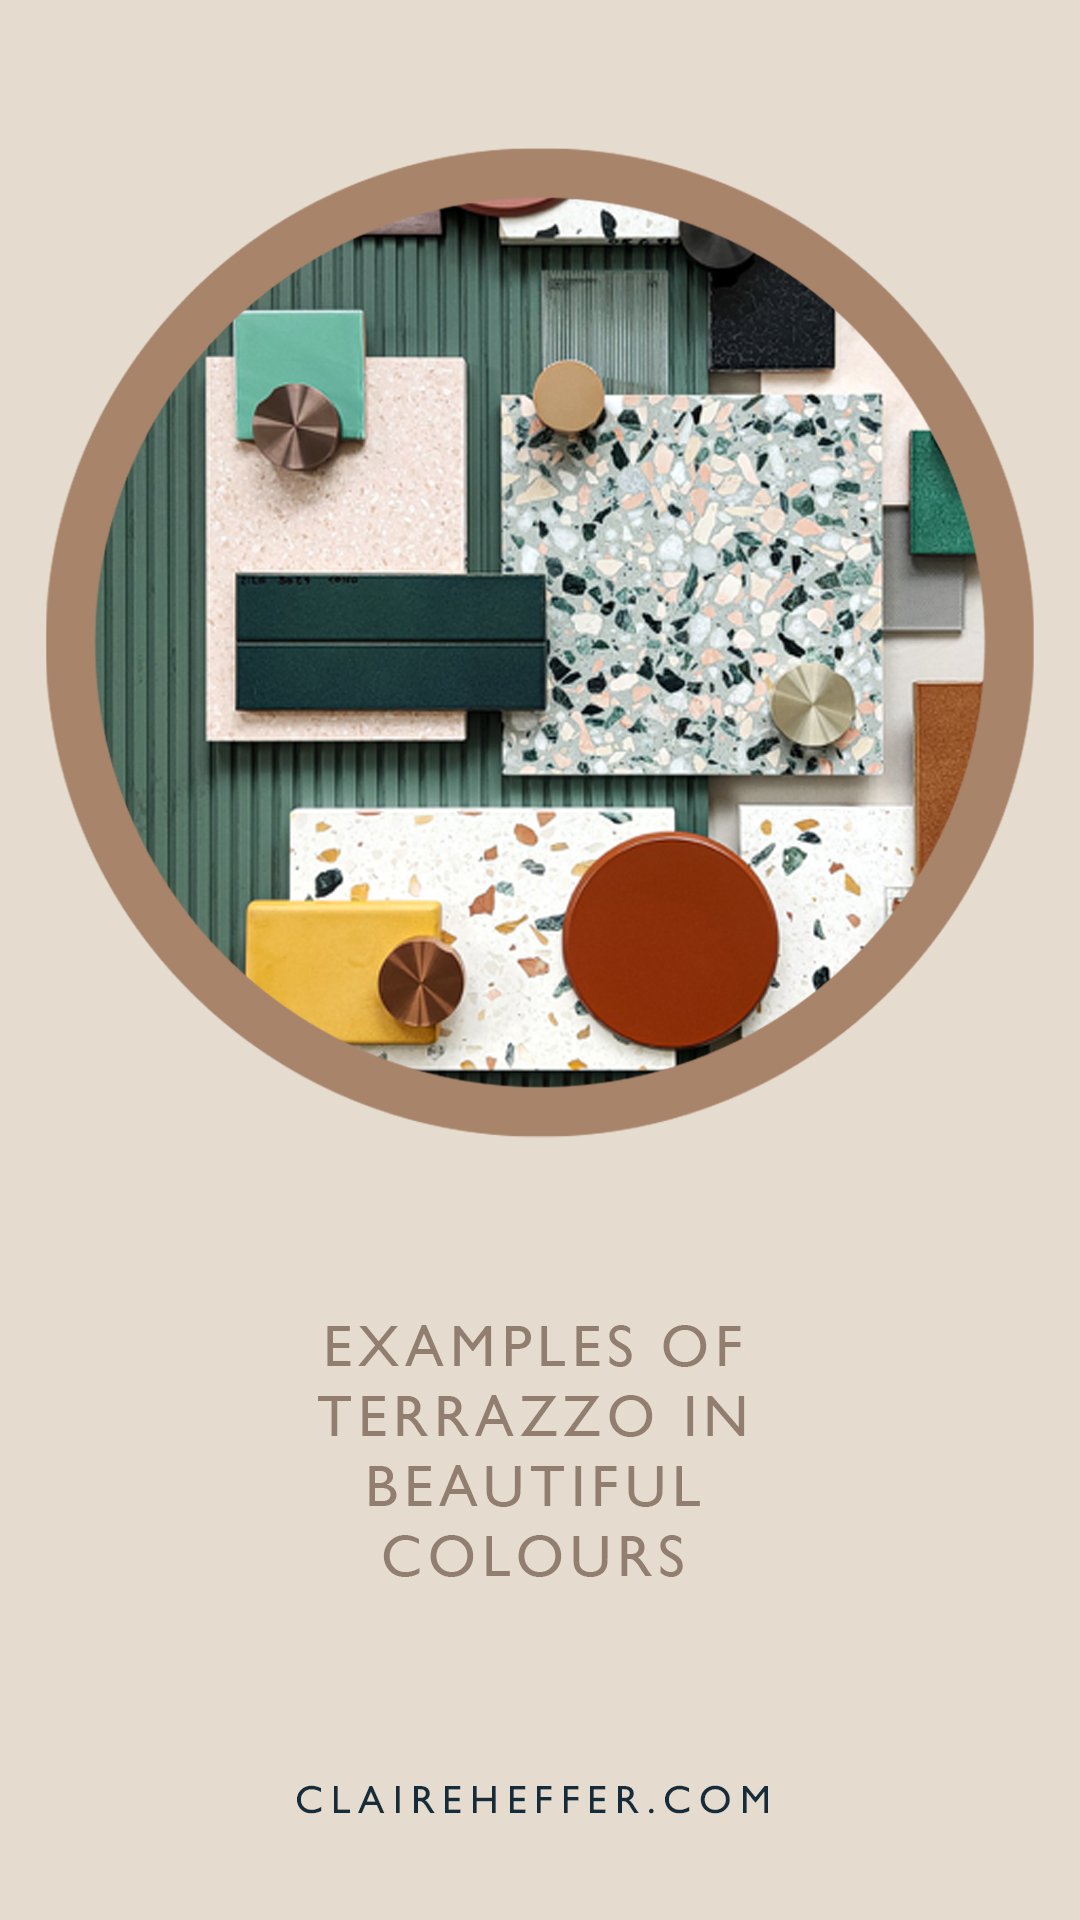  terrazzo, terrazzo trend, Examples Of Stylish Terrazzo, Stylish Terrazzo Kitchen Tops, Examples Of Unusual Terrazzo For Your Home, TerrazzoWith Unusual Materials, Creative Uses Of Terrazzo, Terrazzo Patterns In Art, Terrazzo In Art, The Terrazzo Pat